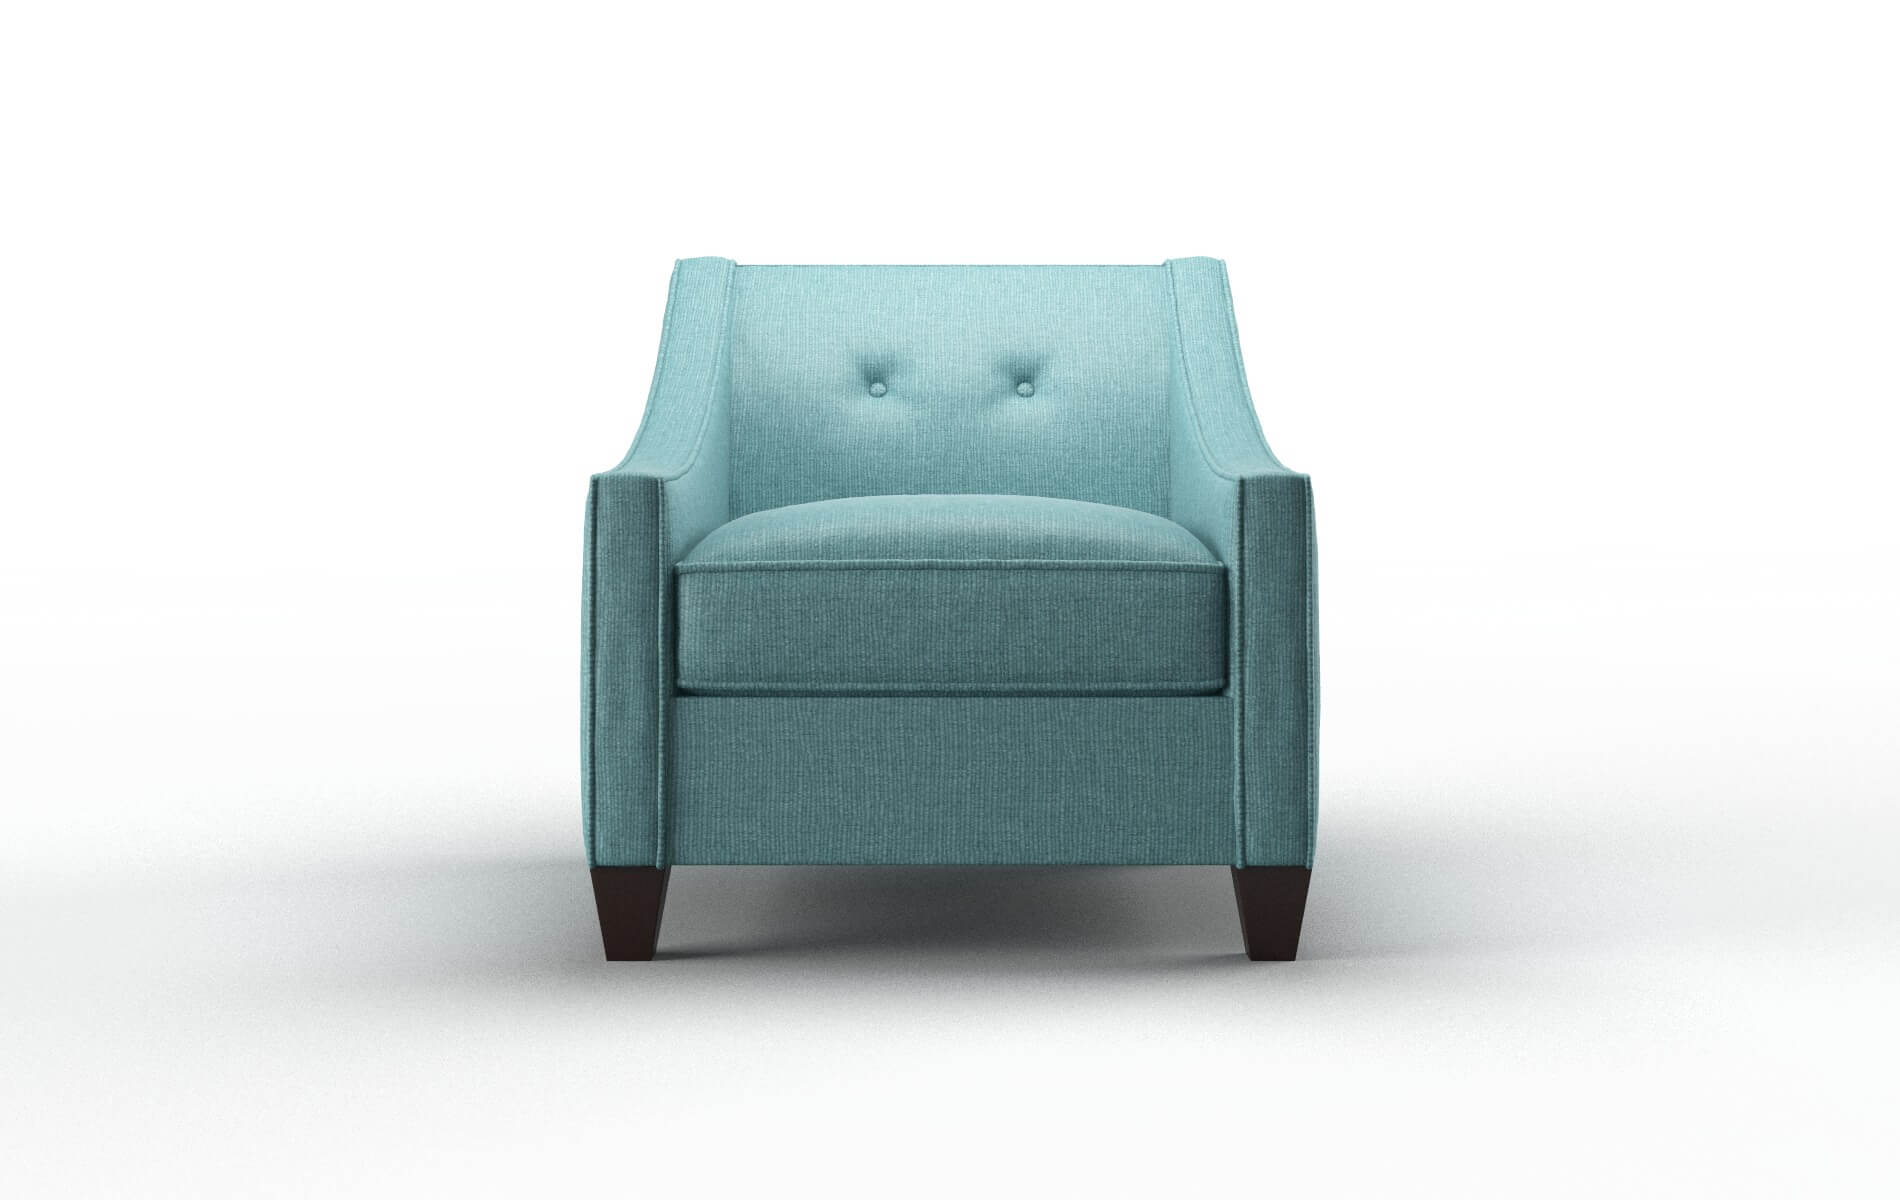 Berlin Parker Turquoise chair espresso legs